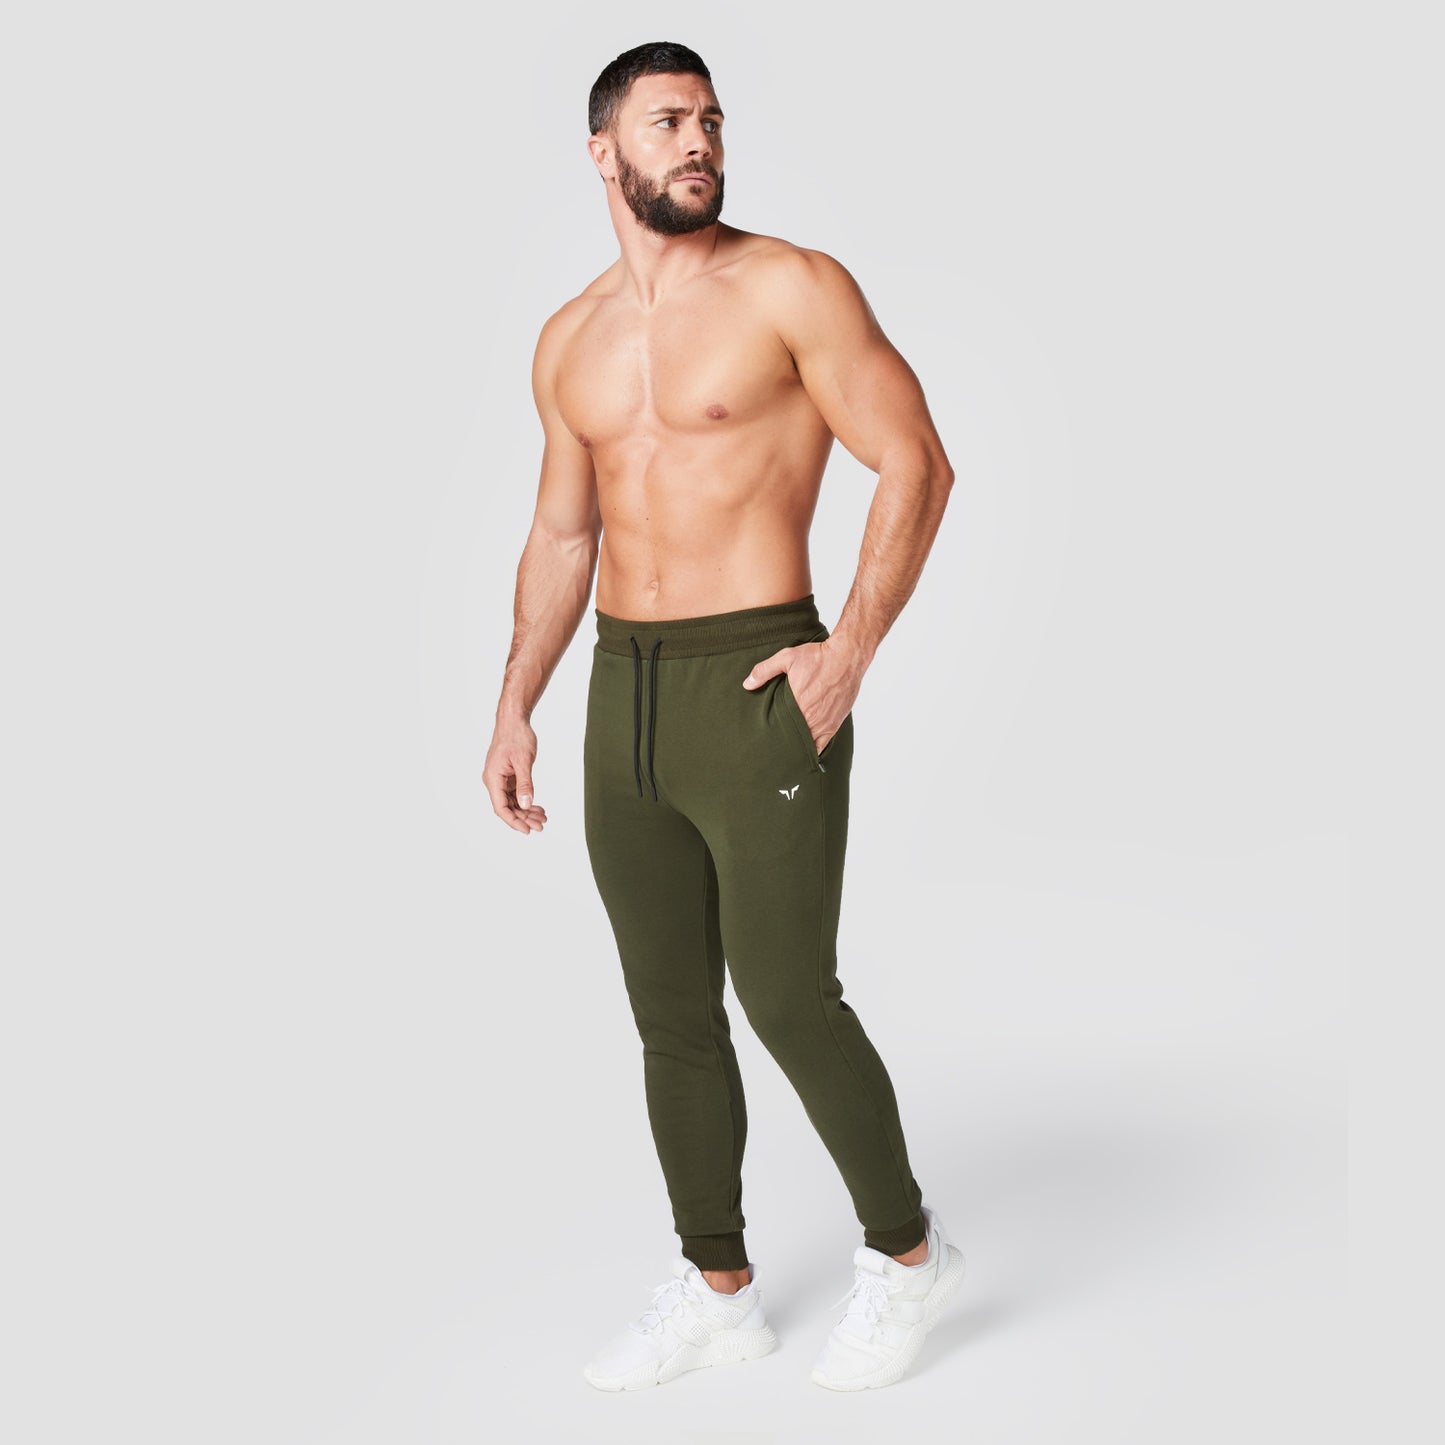 squatwolf-gym-wear-core-cuffed-joggers-khaki-marl-workout-pants-for-men